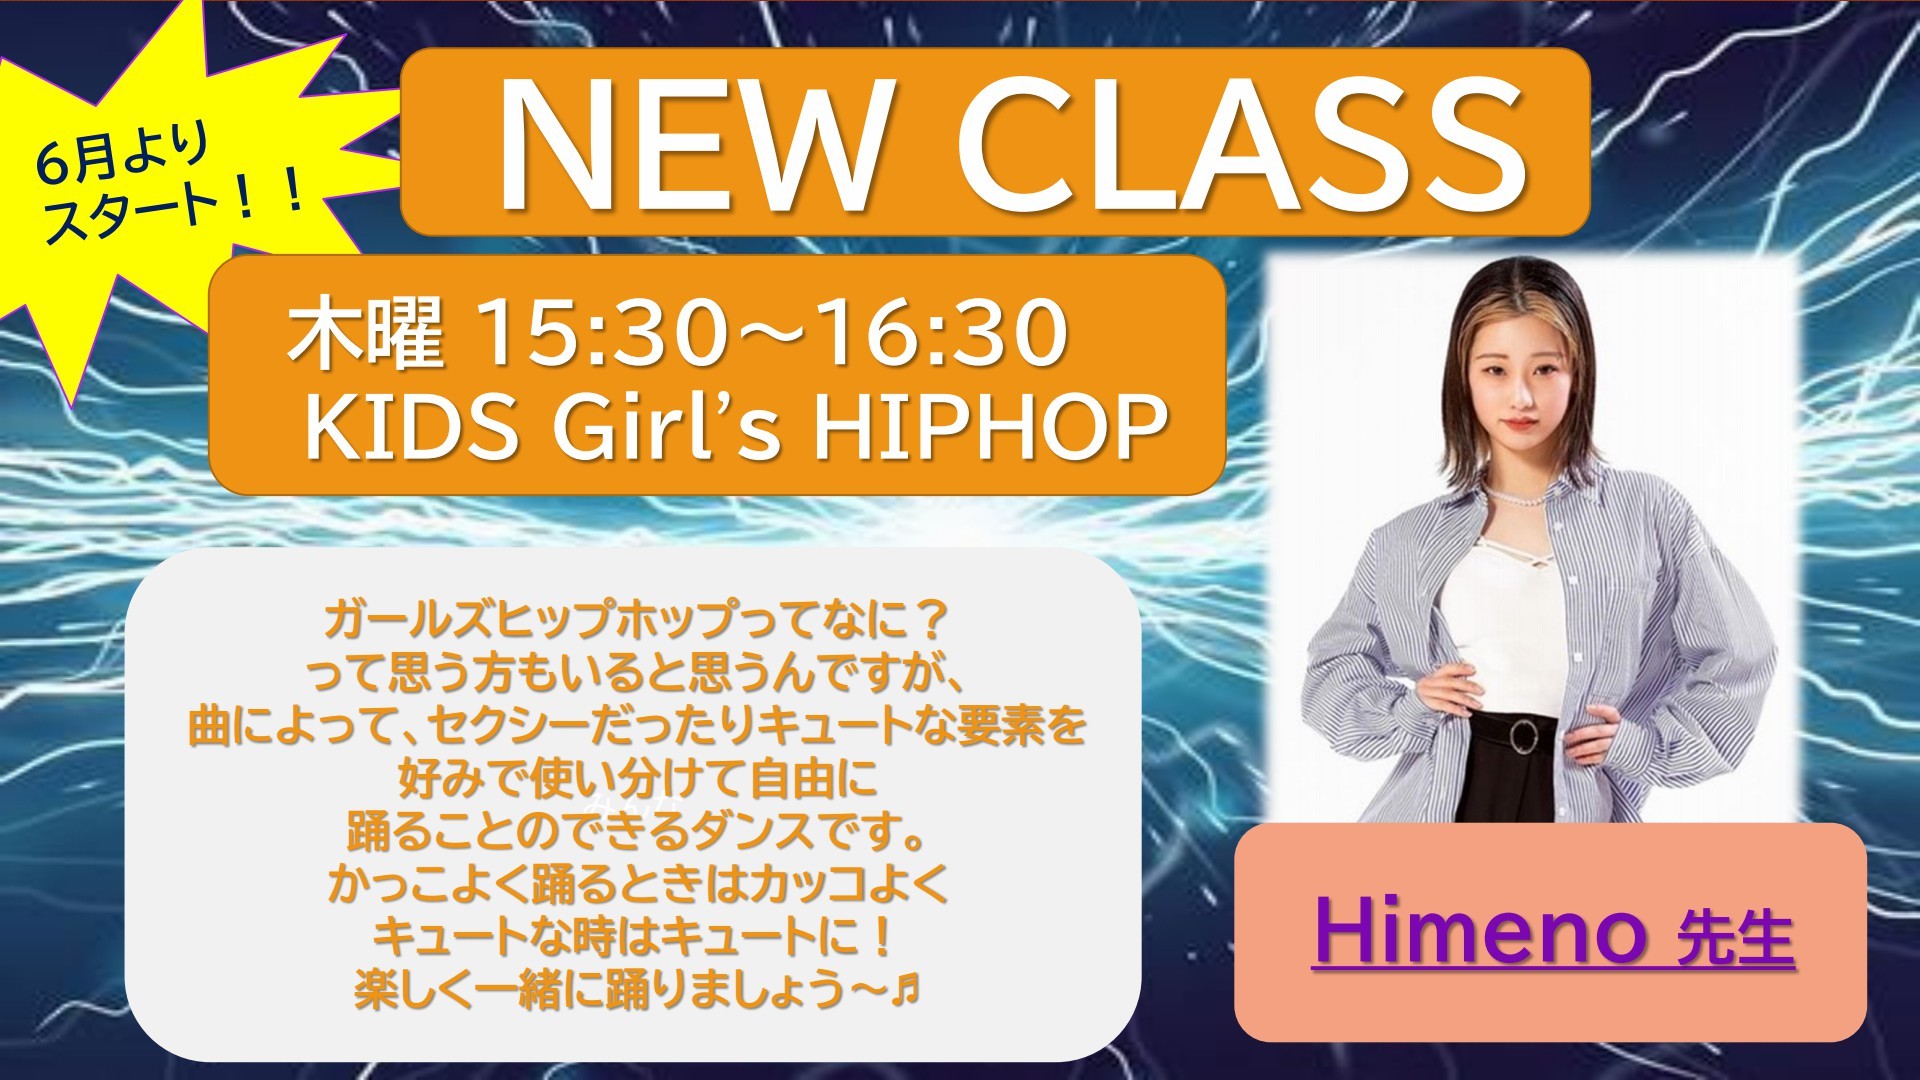 Himeno newclass